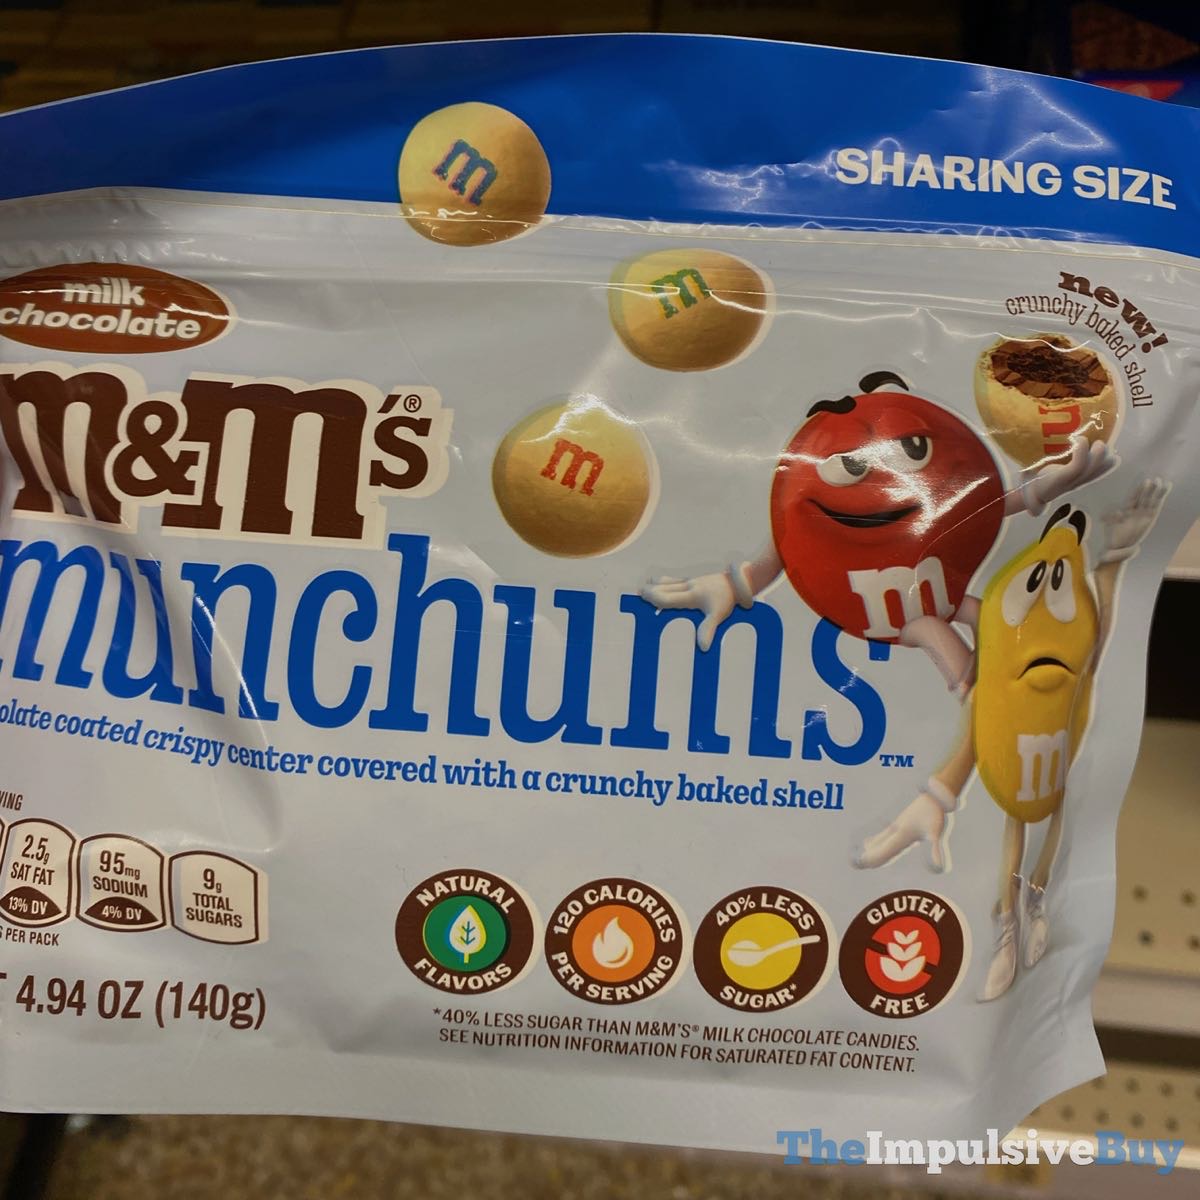 M&M's Munchums Salted Caramel Chocolate Baked Snacks - 4.94oz. Bag - Walmart .com